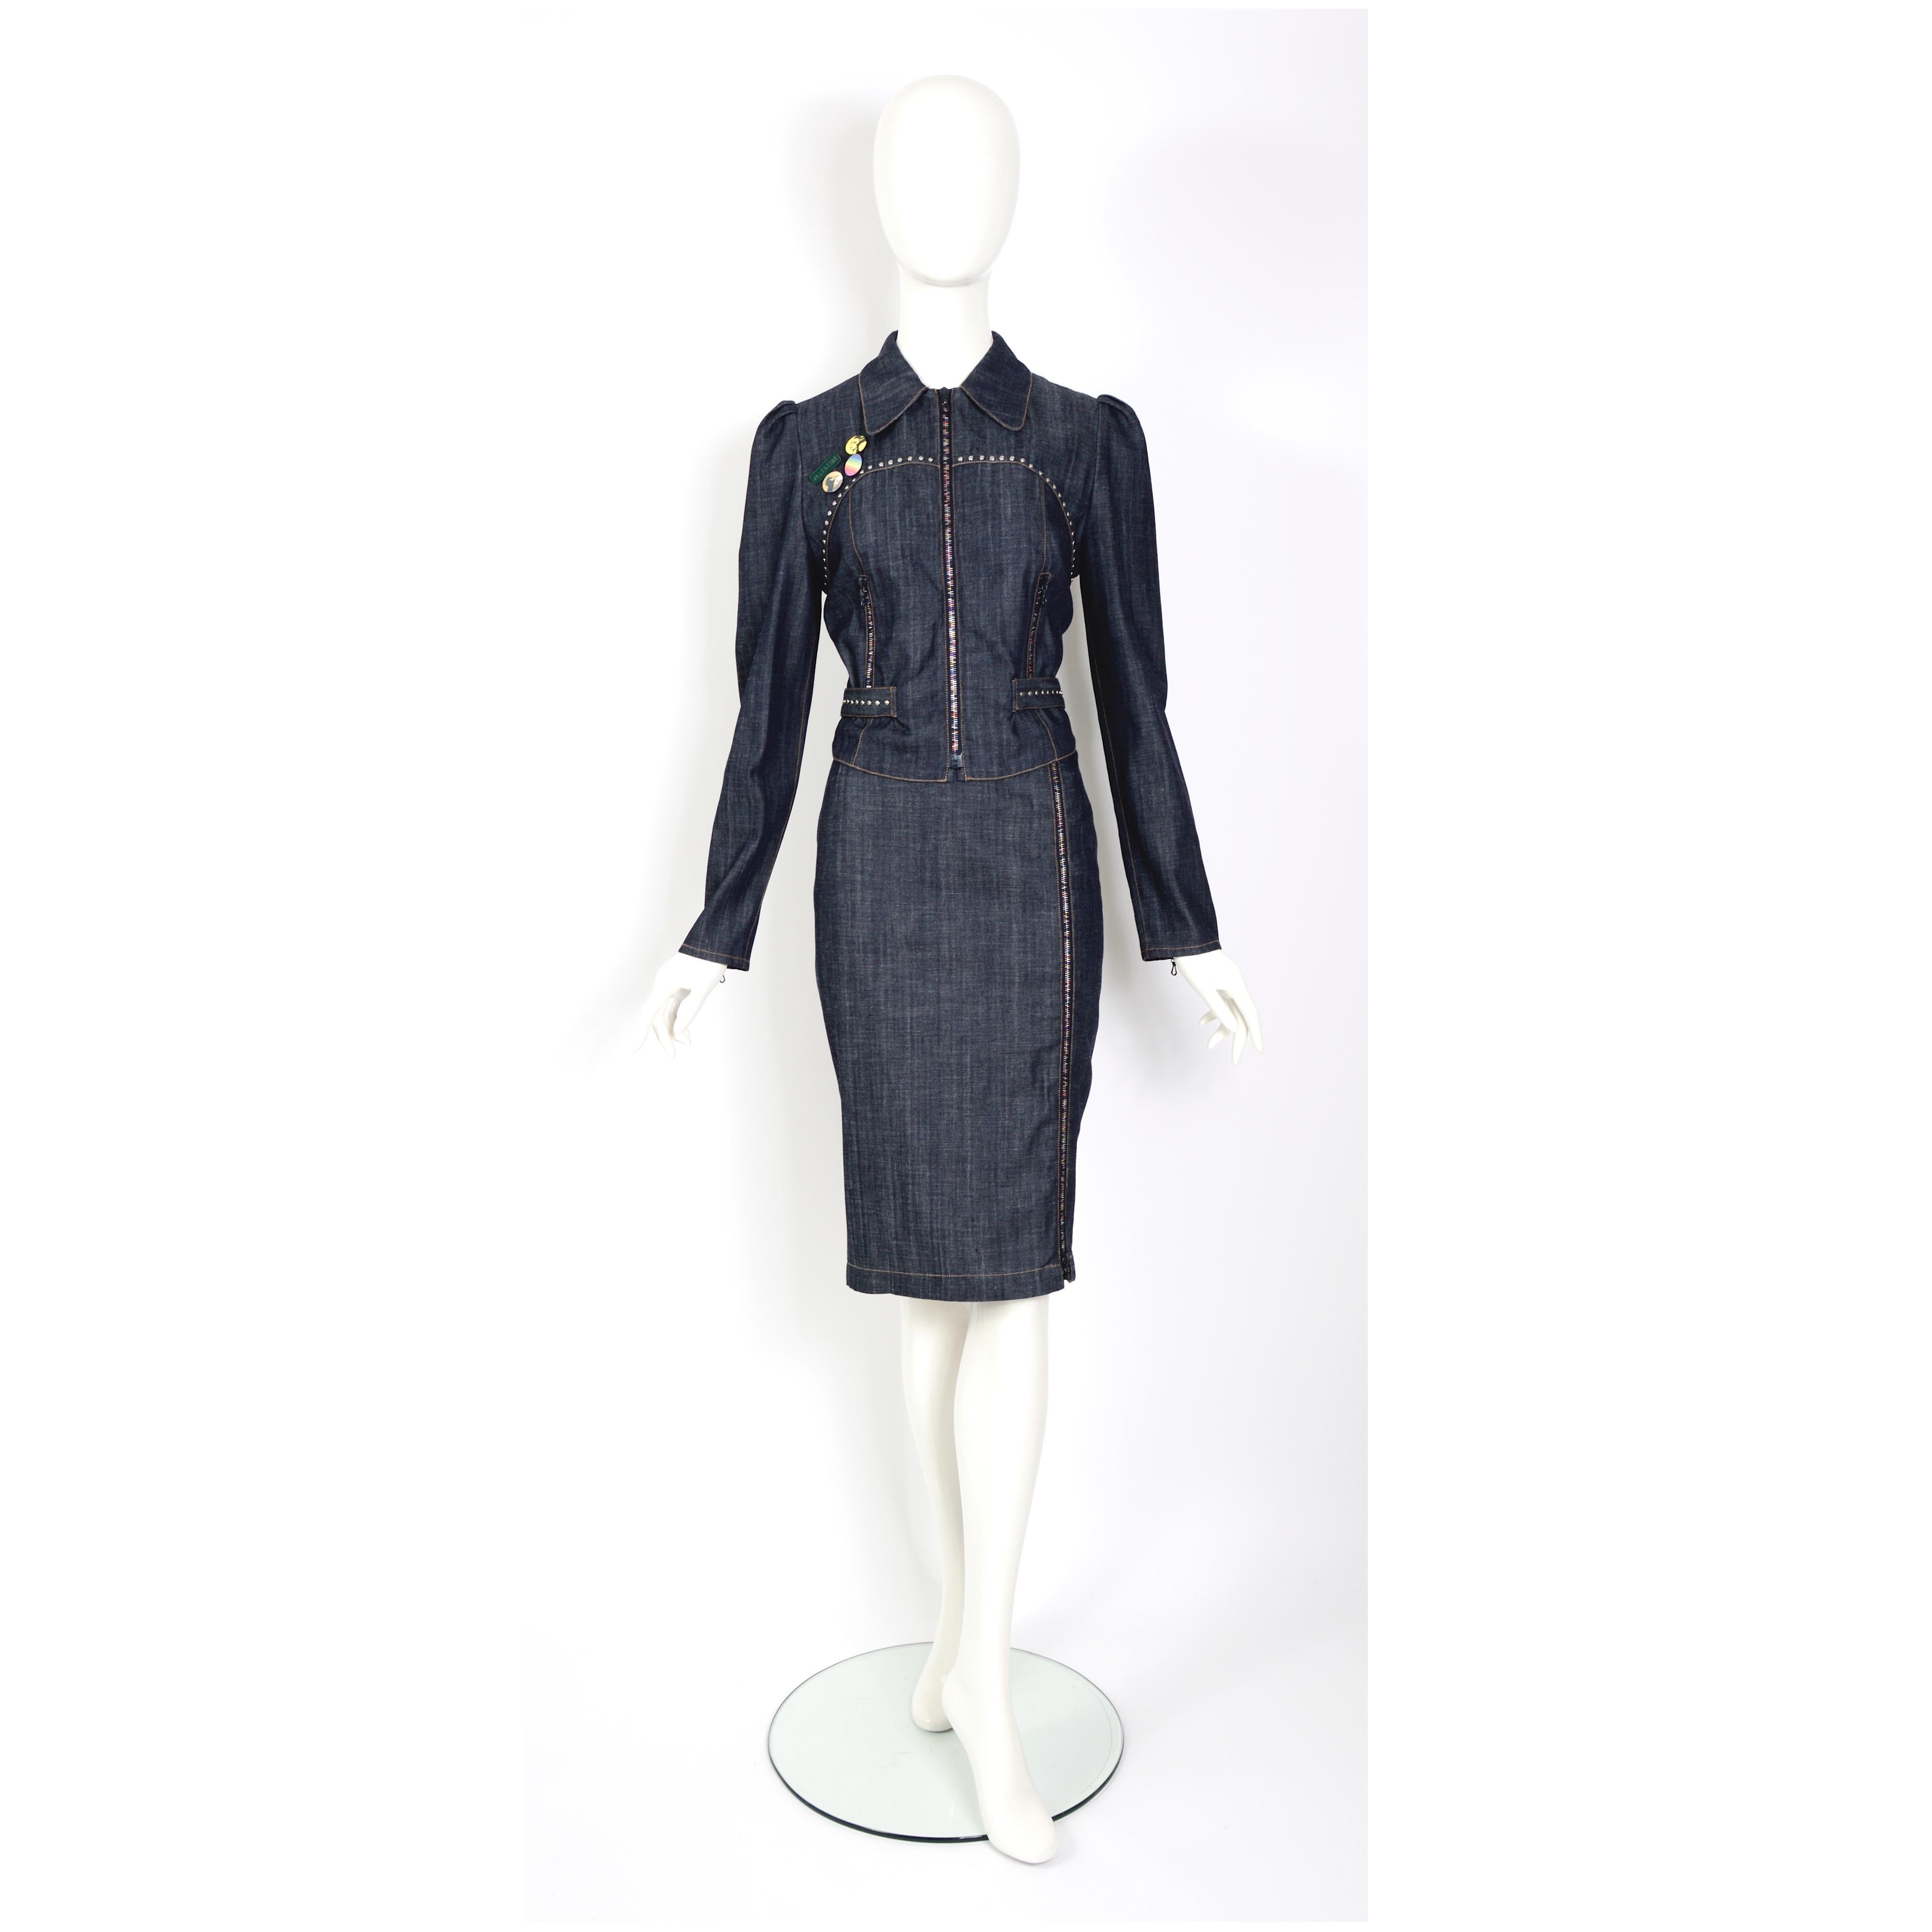 Chloé by Stella McCartney vintage 2001 denim jacket and skirt set For Sale 4